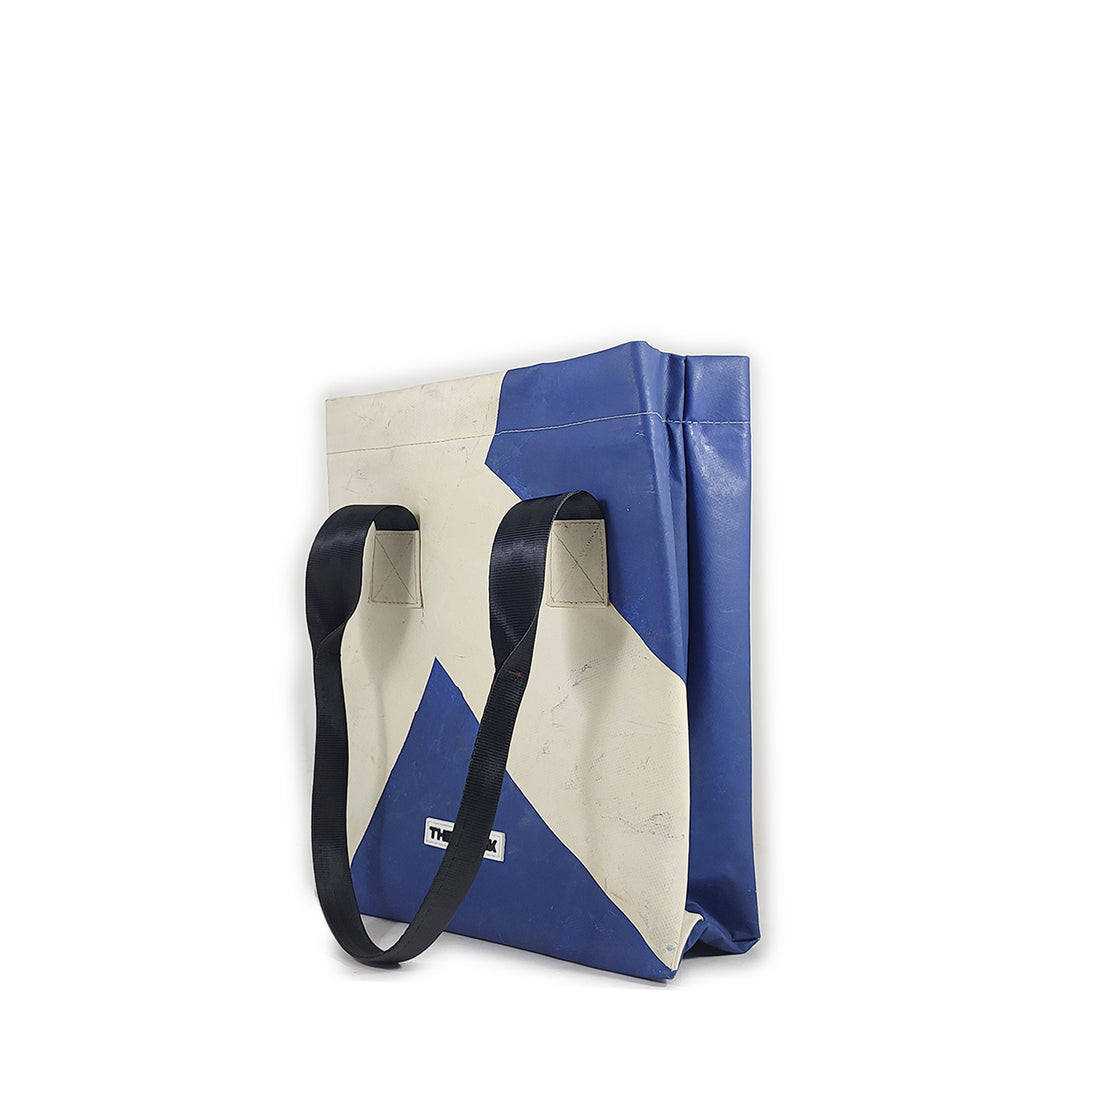 J-Shopper | 257 - Shoulder Bag Made From Upcycled Materials